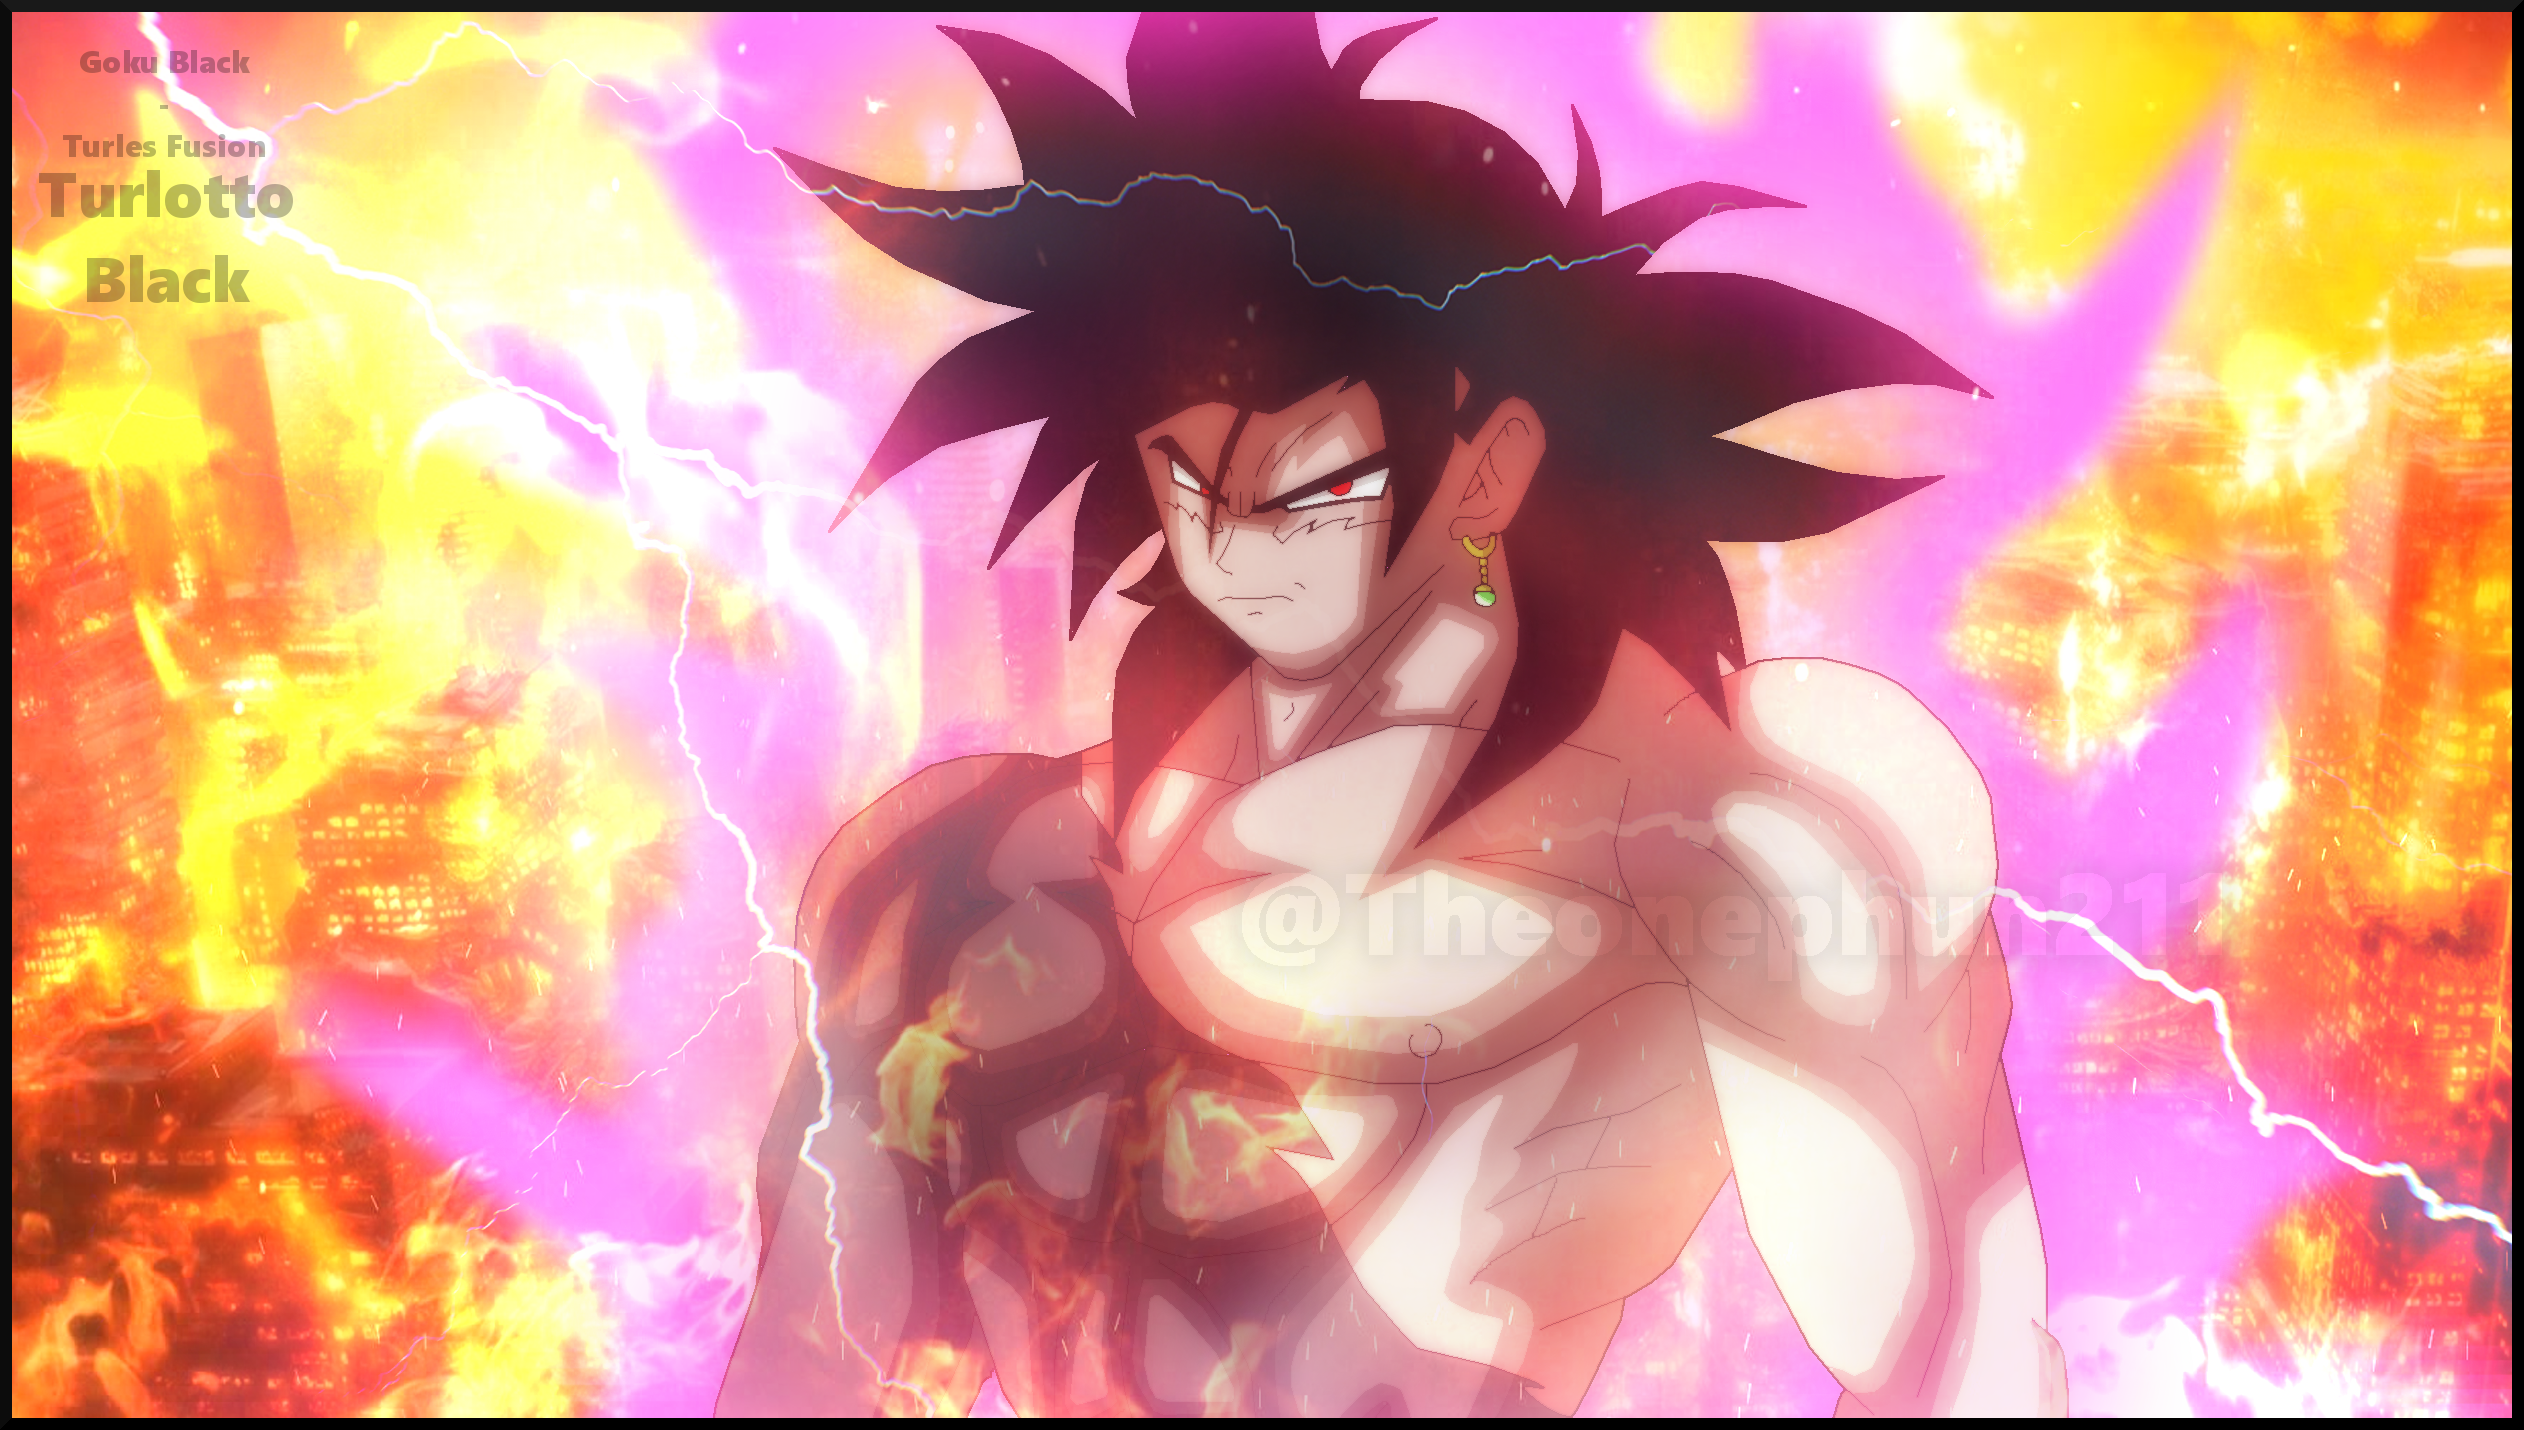 Goku Black and Turles Fusion: Turlotto Black by TheOnePhun211 on DeviantArt